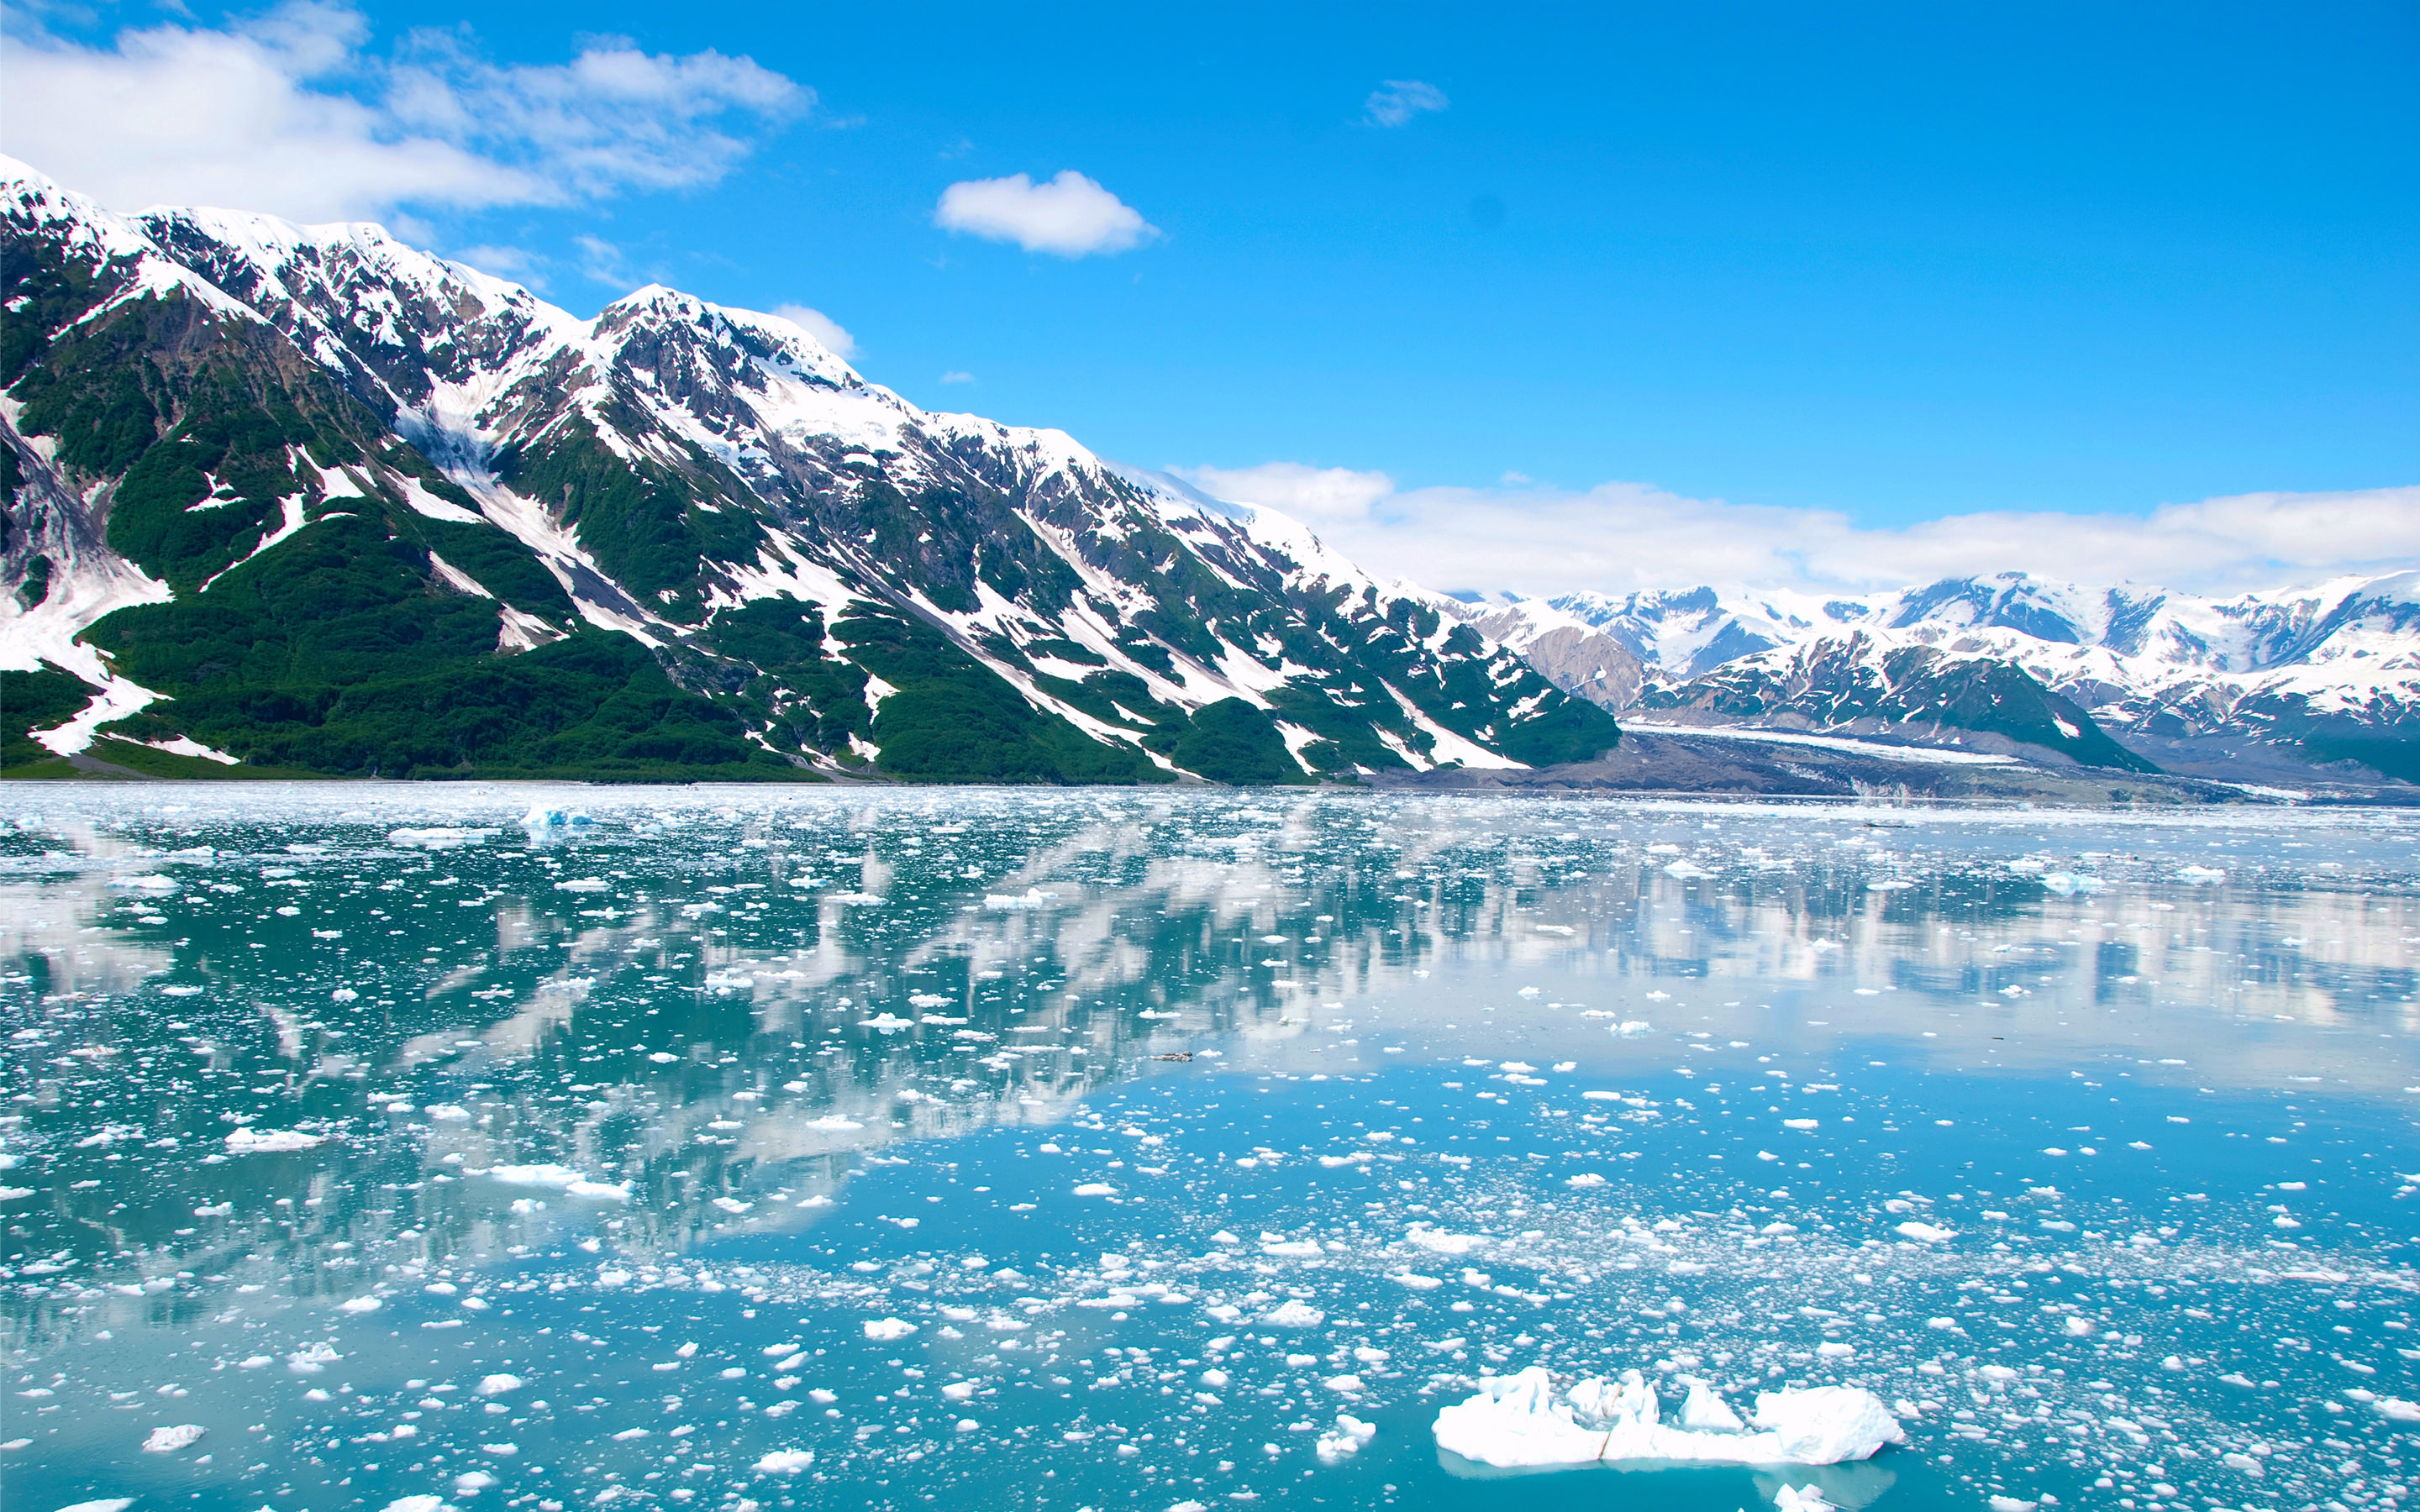 Alaska Snow Mountains HD Widescreen Wallpaper